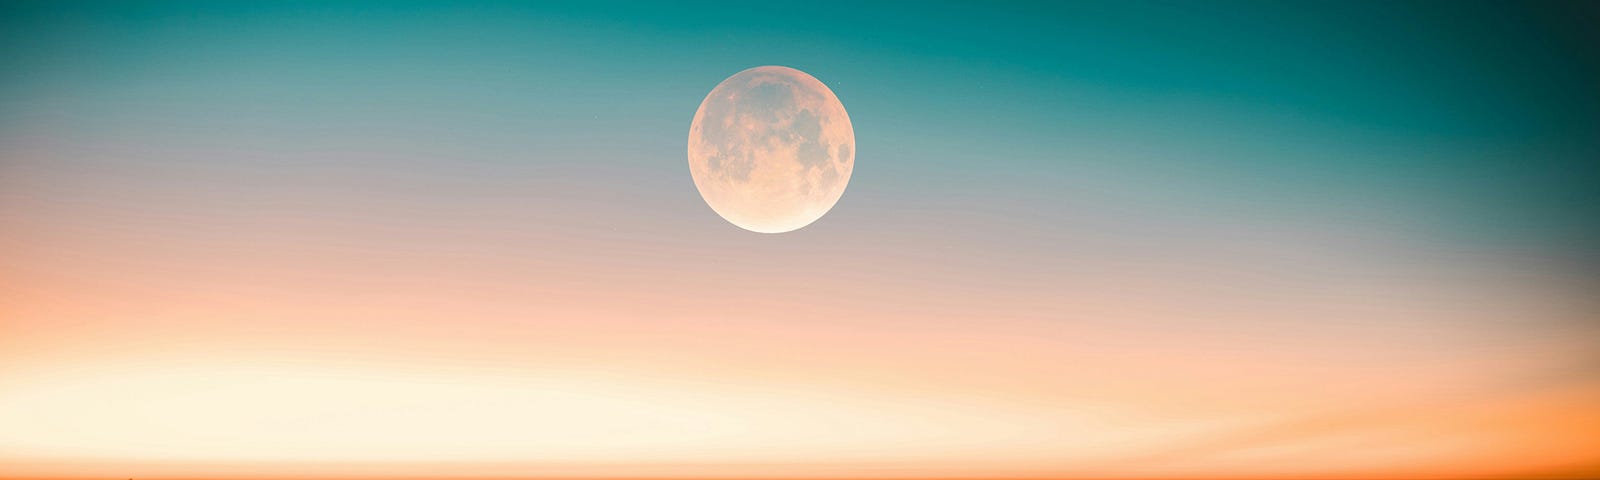 beautiful moon against an aqua sky